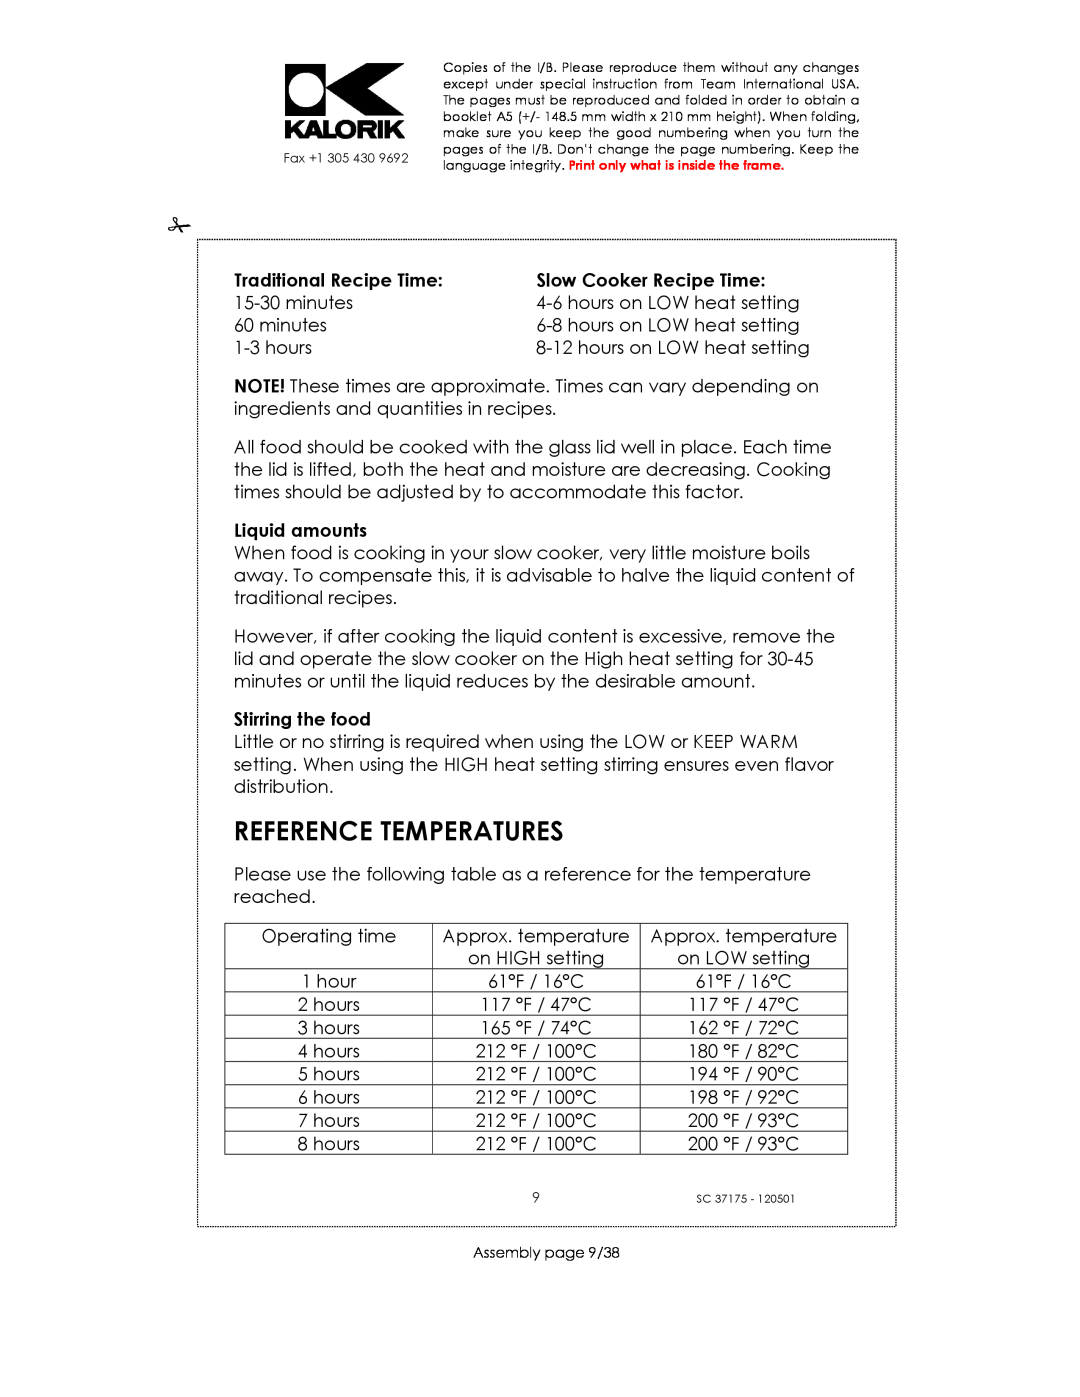 Kalorik SC 37175 manual Reference Temperatures, Traditional Recipe Time, Slow Cooker Recipe Time, Liquid amounts 